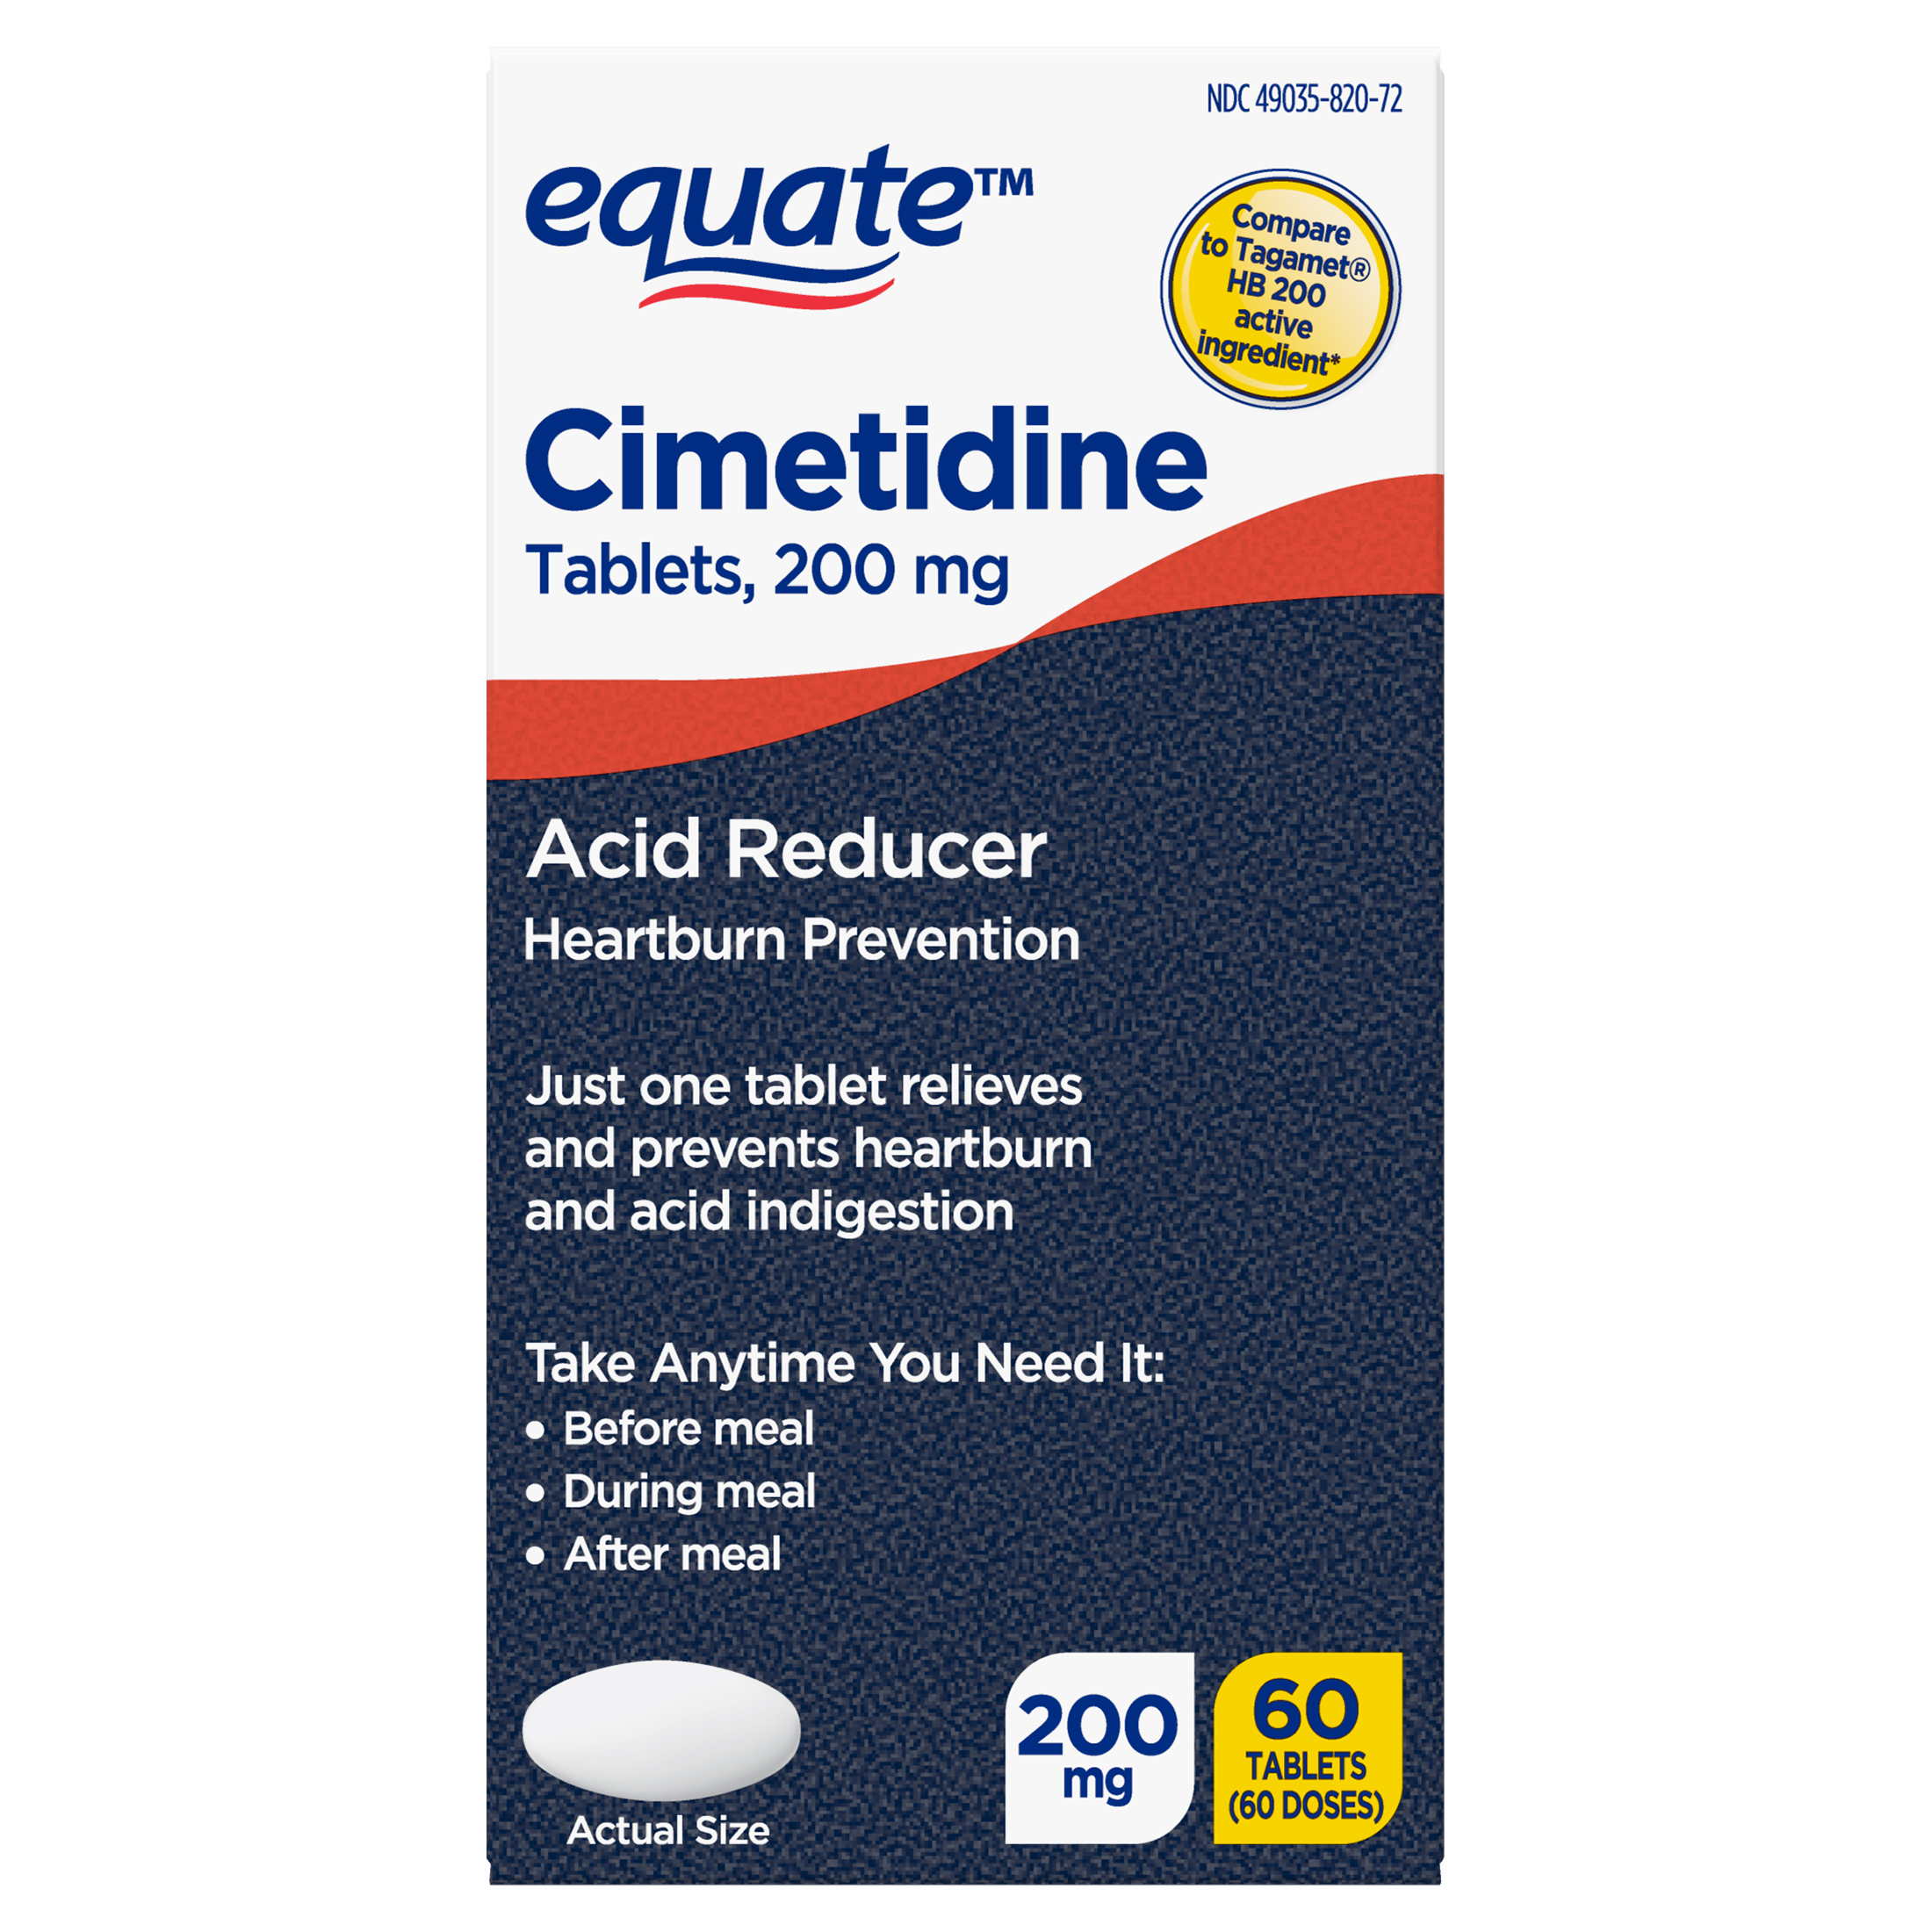 Equate Cimetidine Tablets 200 mg, Acid Reducer,60 Count - image 1 of 8